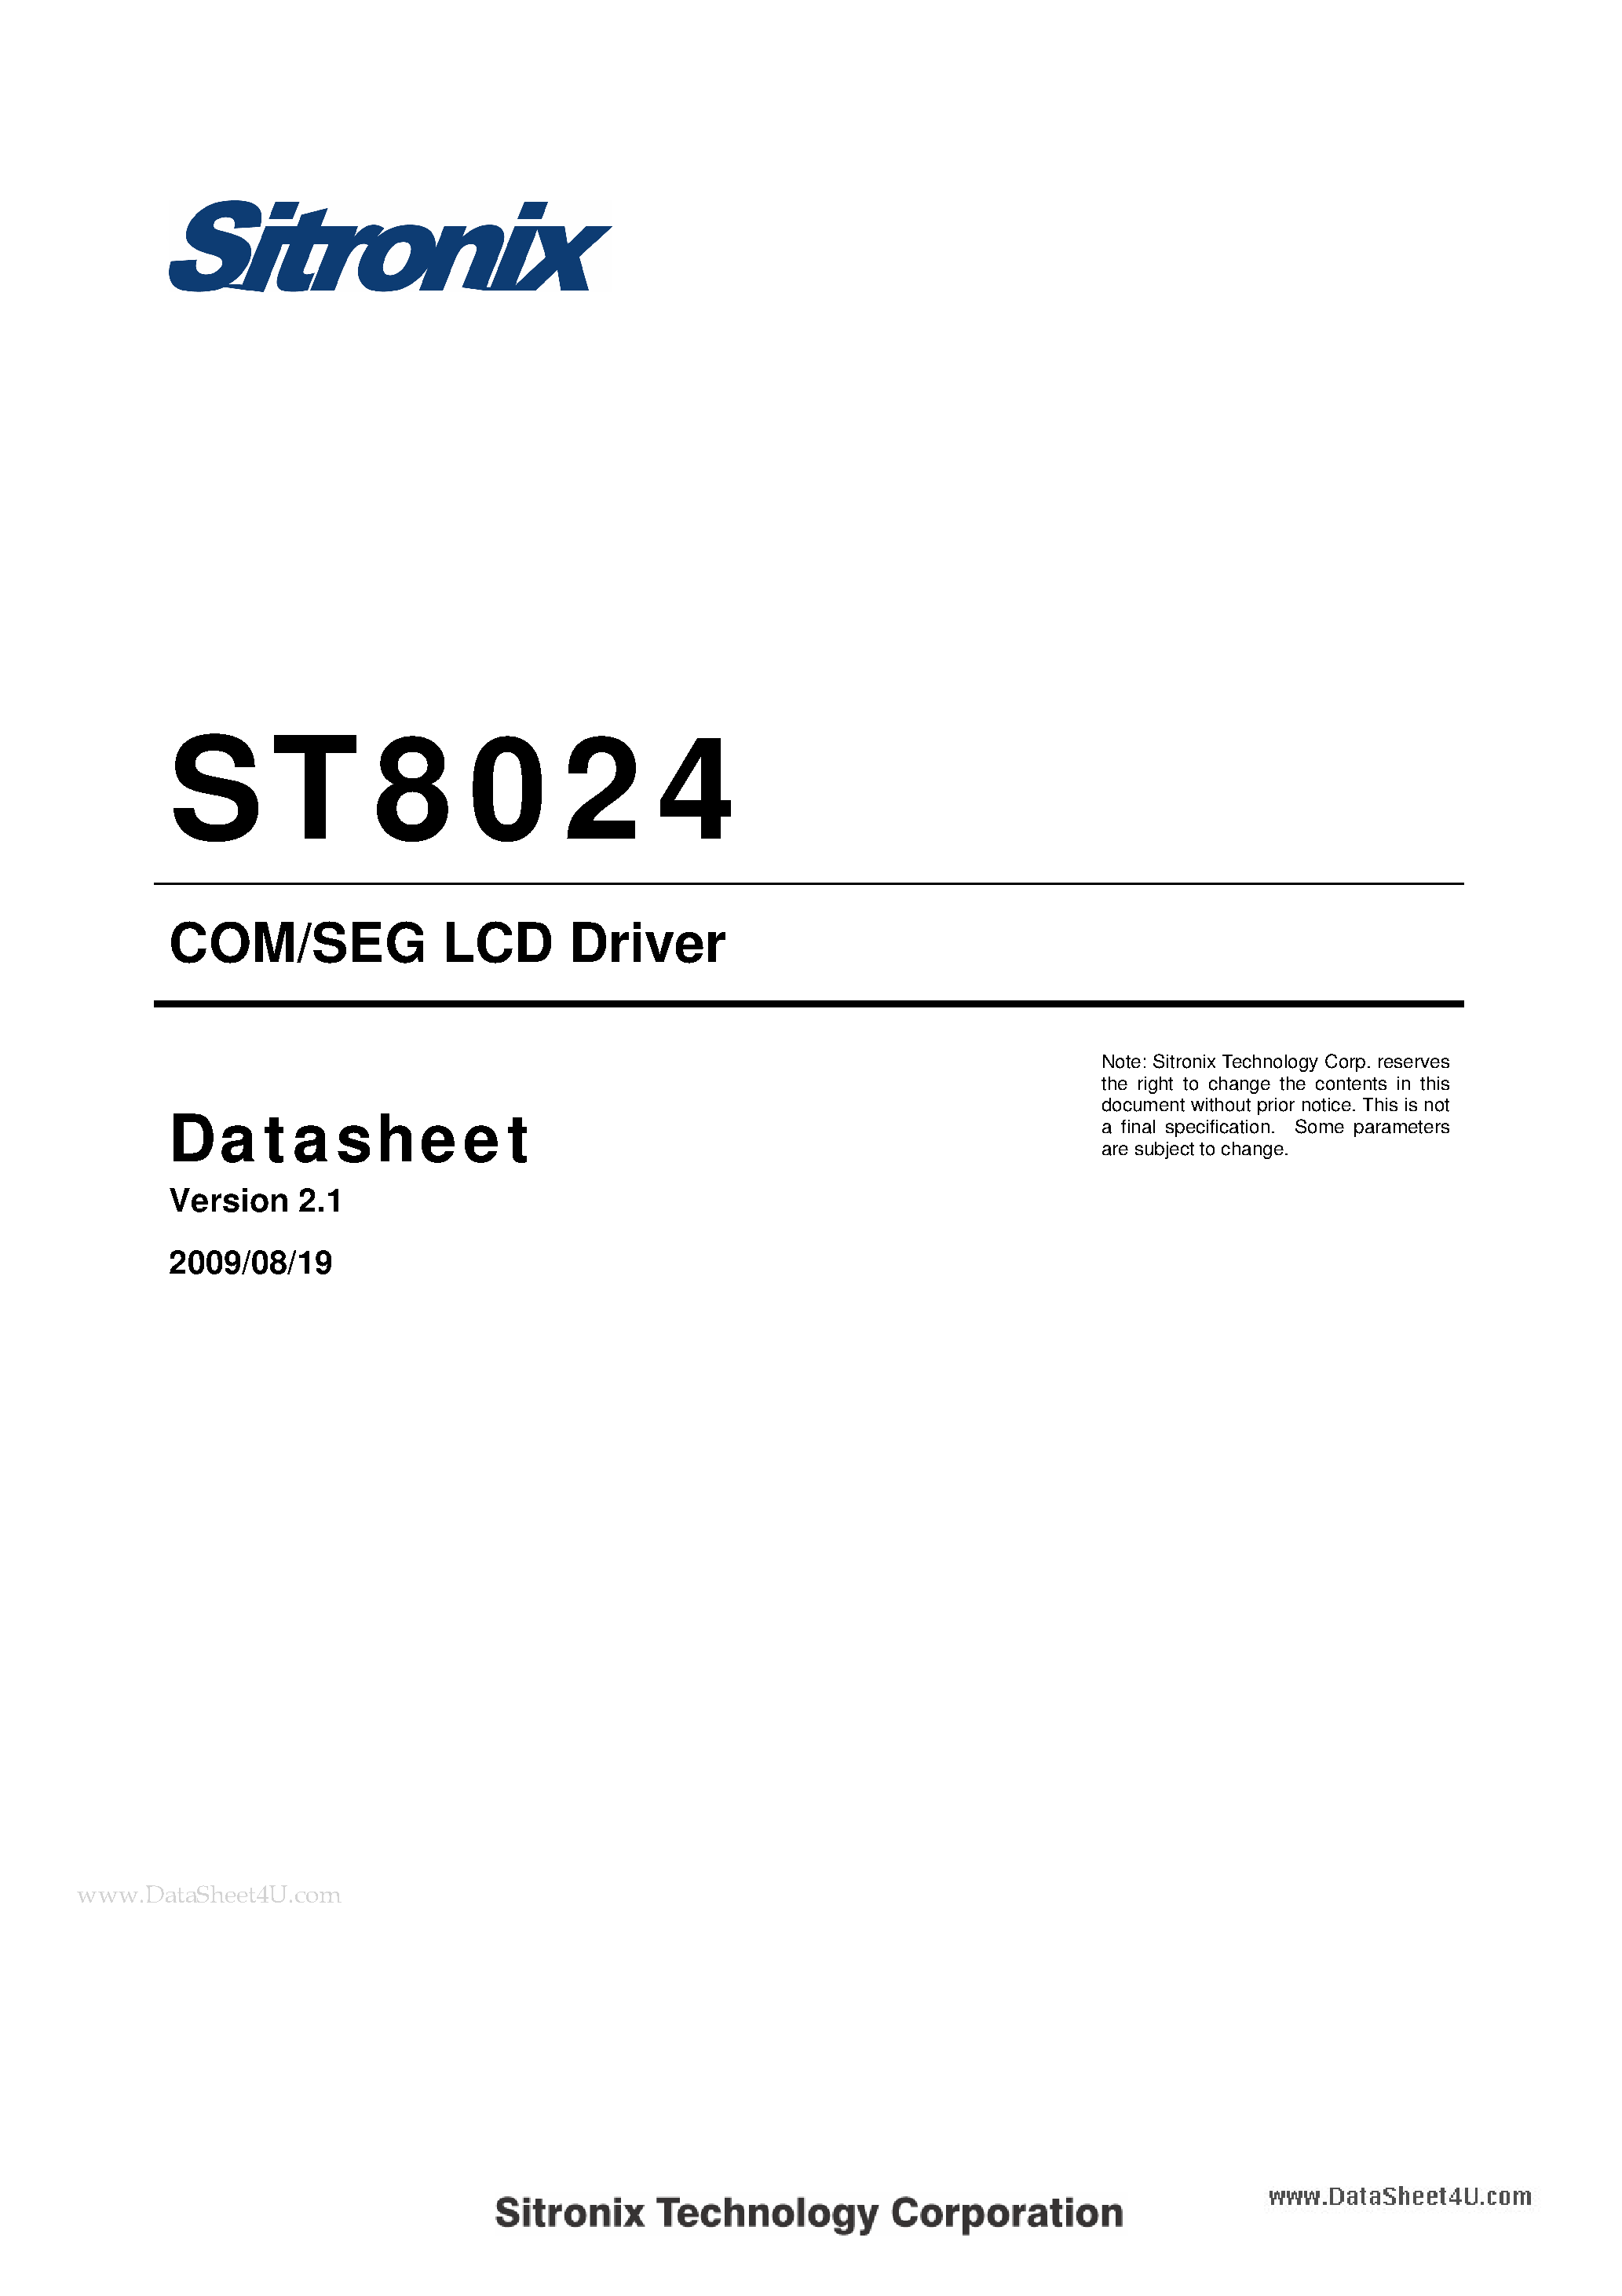 Datasheet ST8024 - COM/SEG LCD Driver page 1